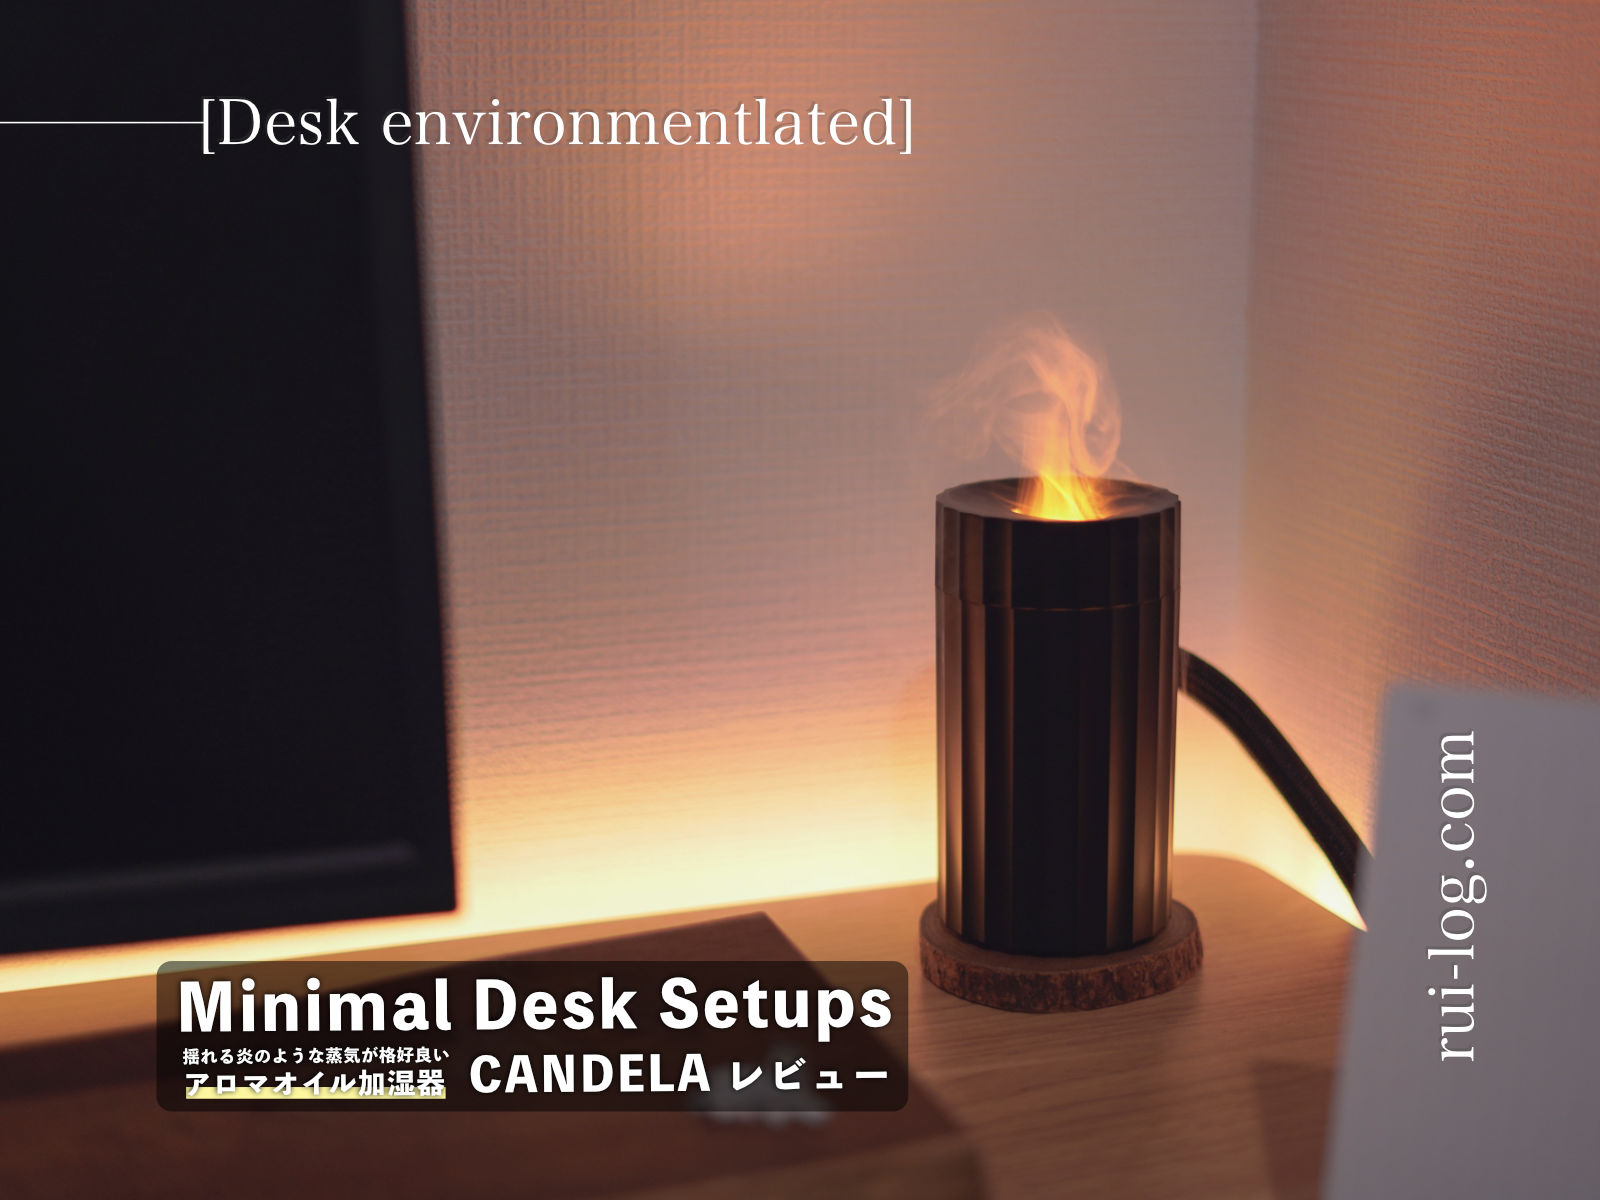 Minimal Desk Setups「CANDELA」アロマオイル加湿器をレビュー